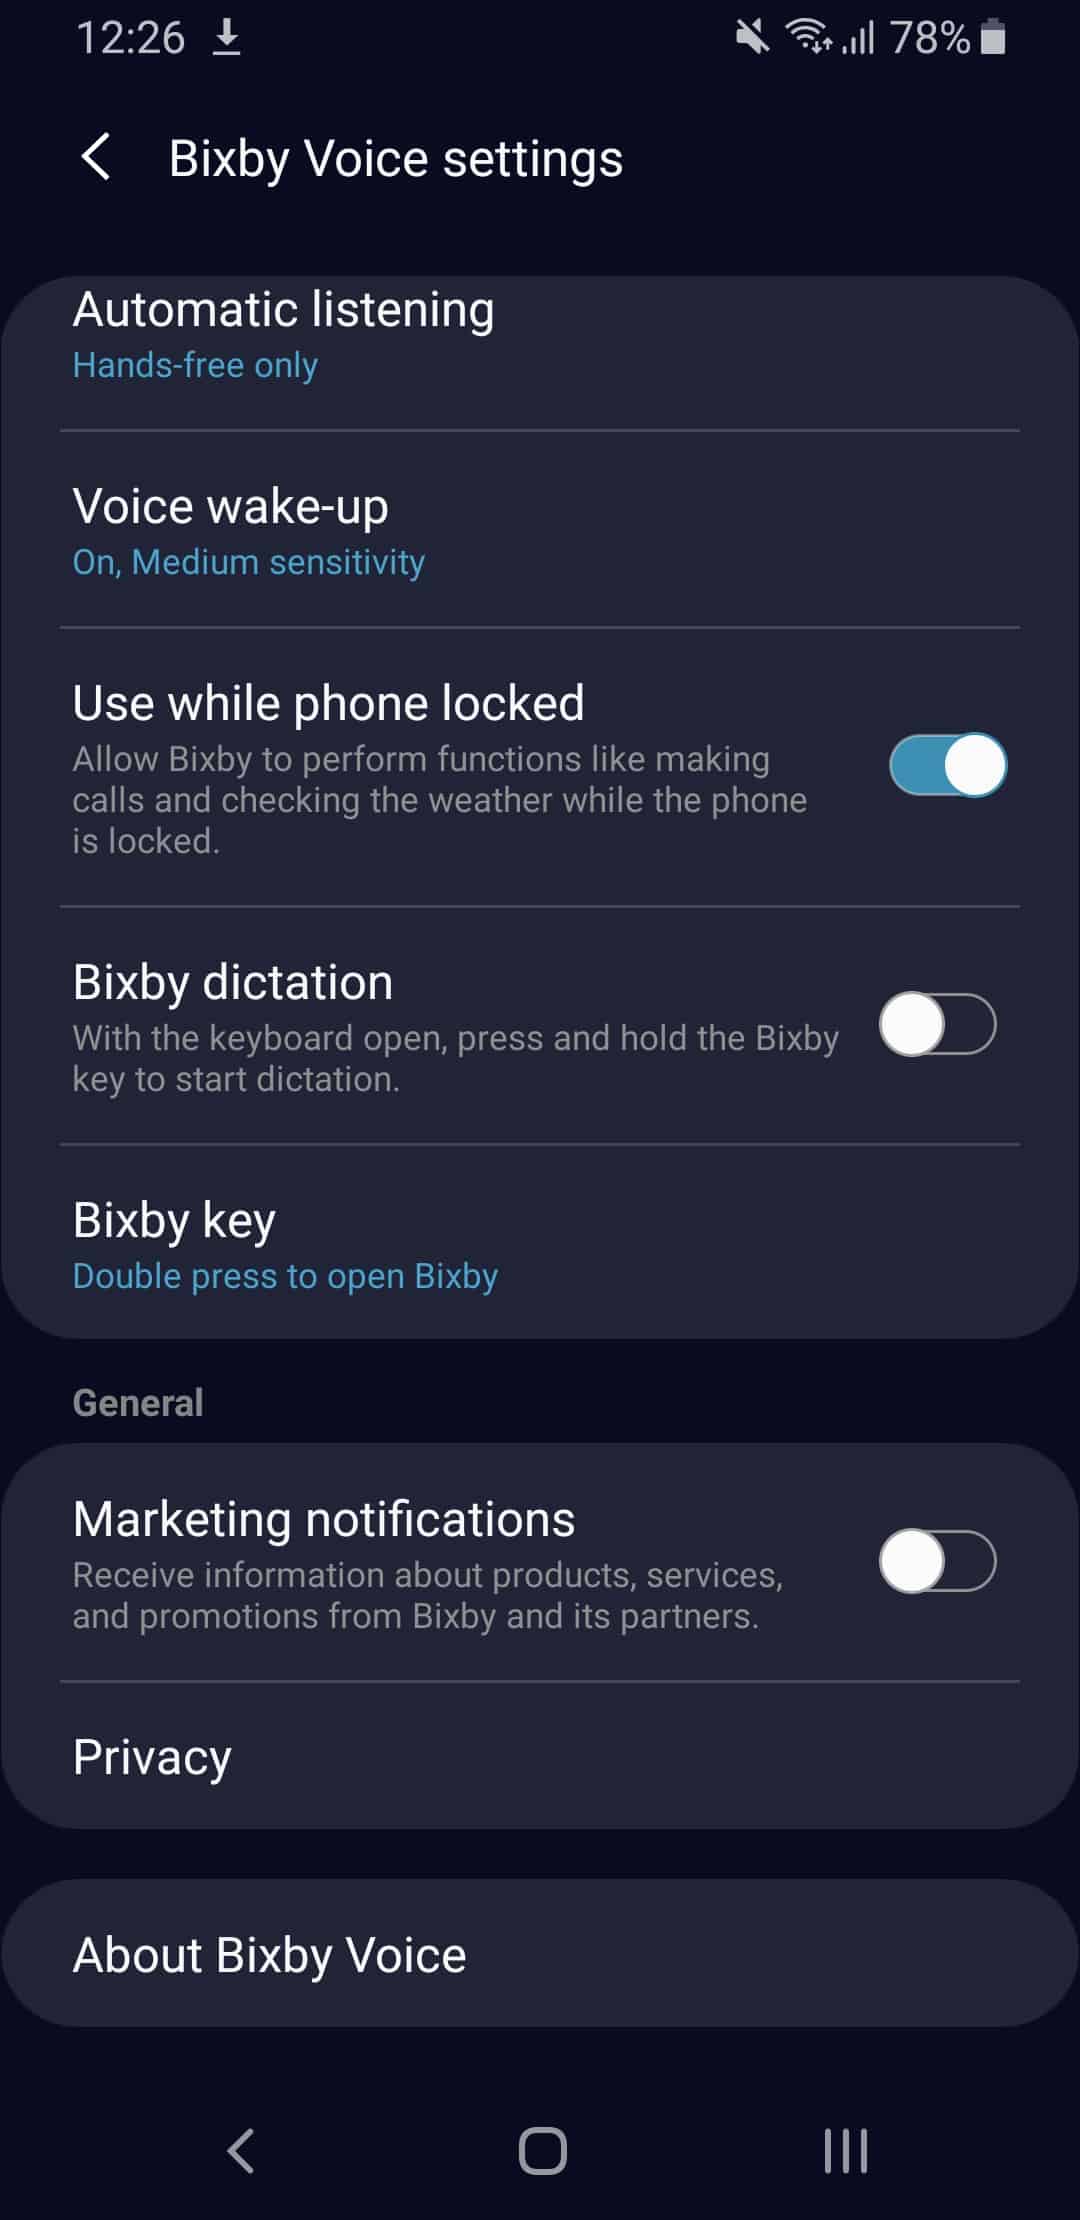 The settings menu in Bixby.